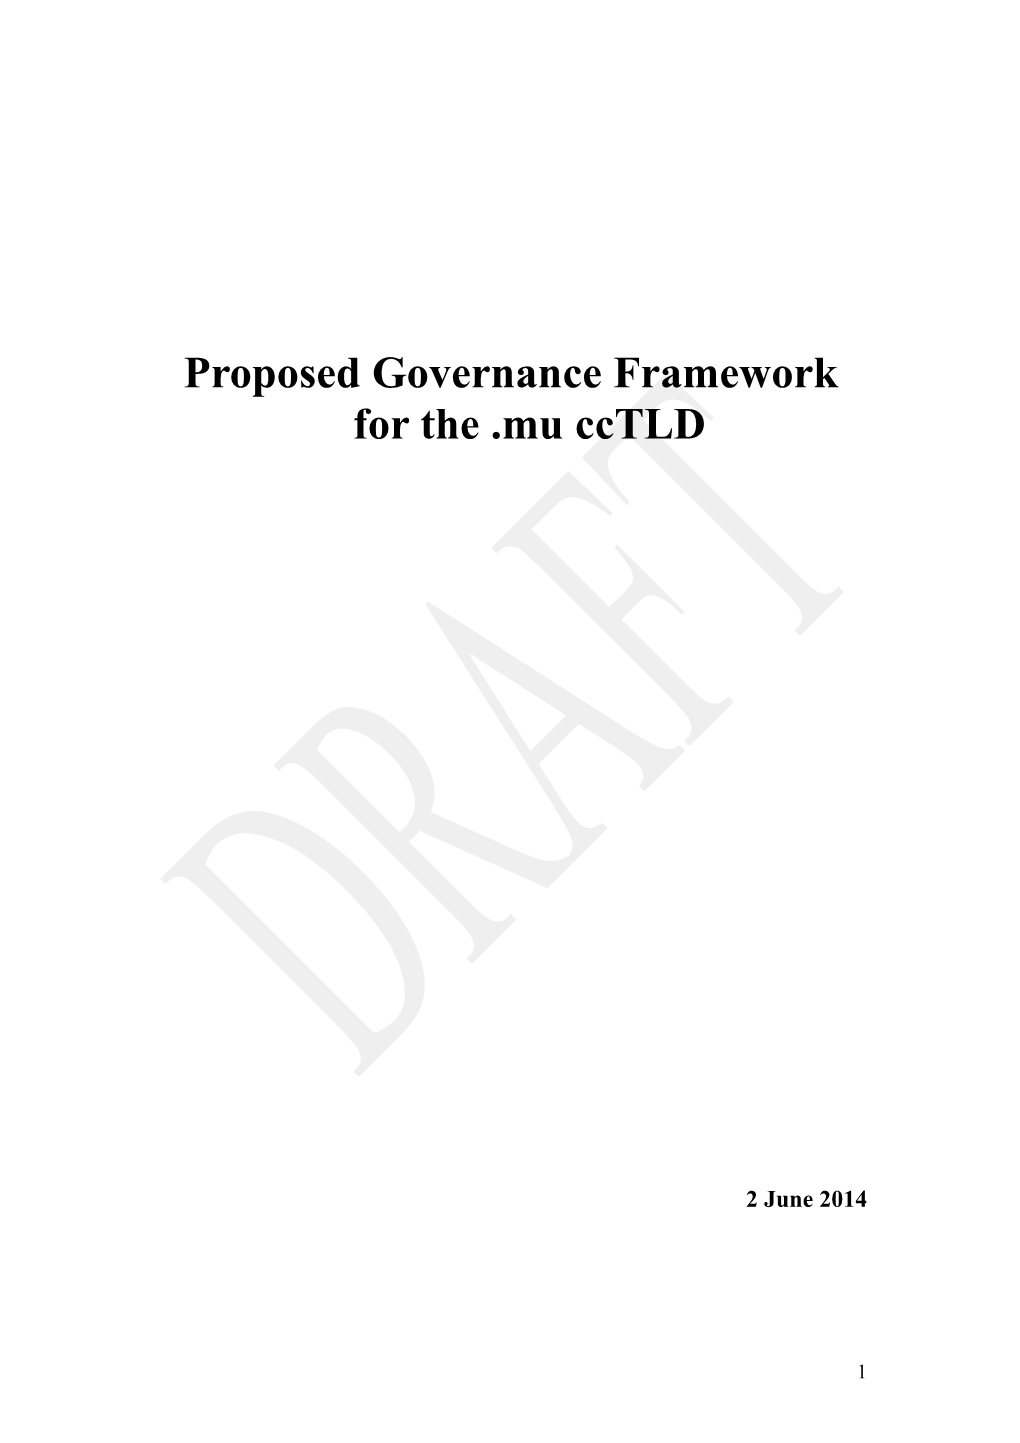 Proposed Governance Framework for The